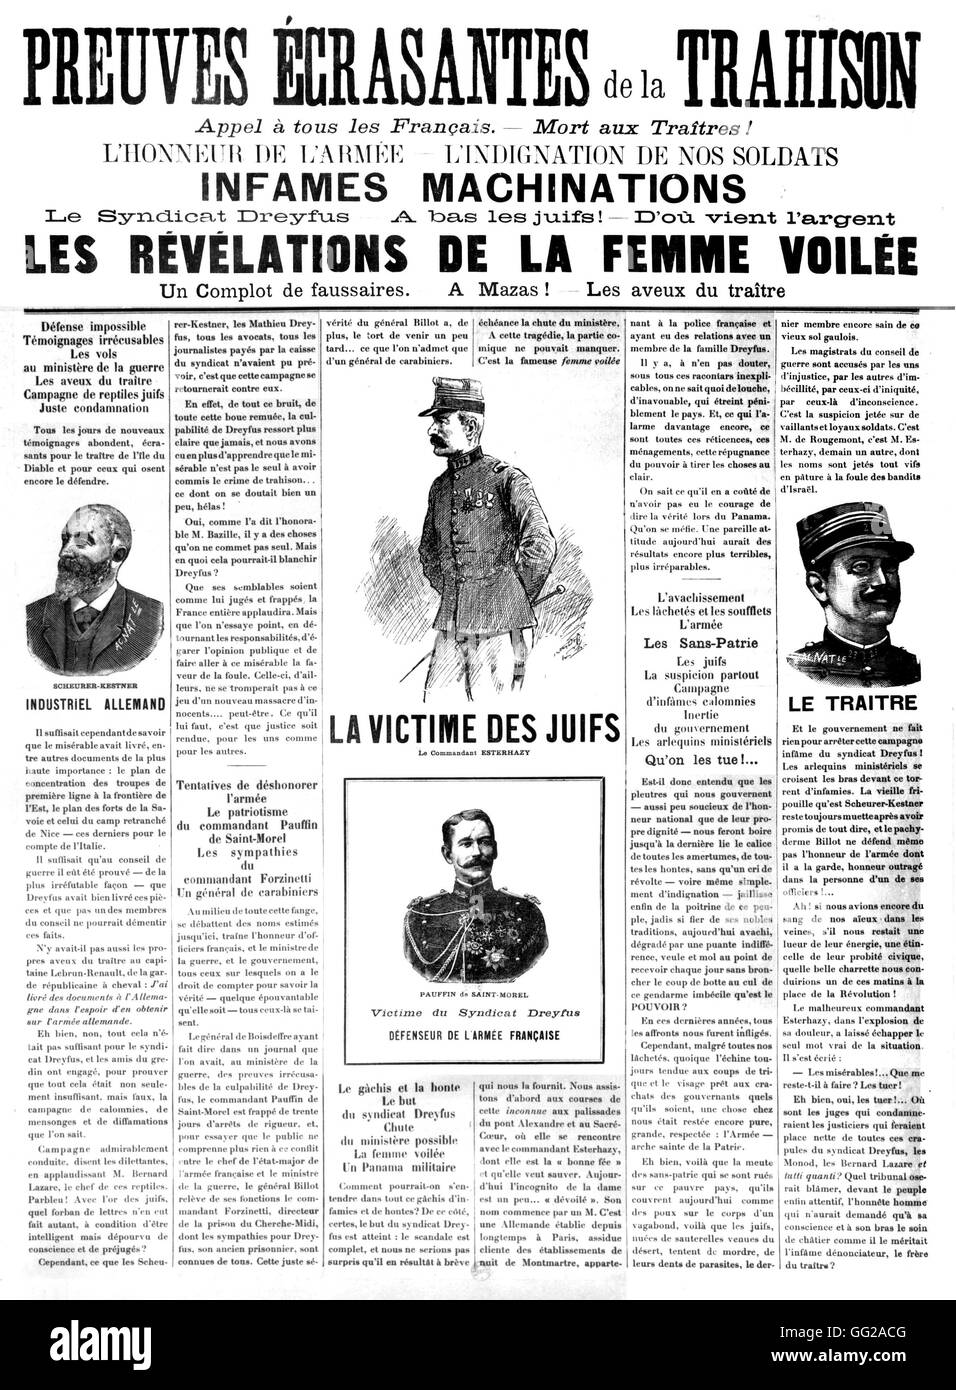 Anti-dreyfusard newspaper 1898 France - Dreyfus affair Stock Photo